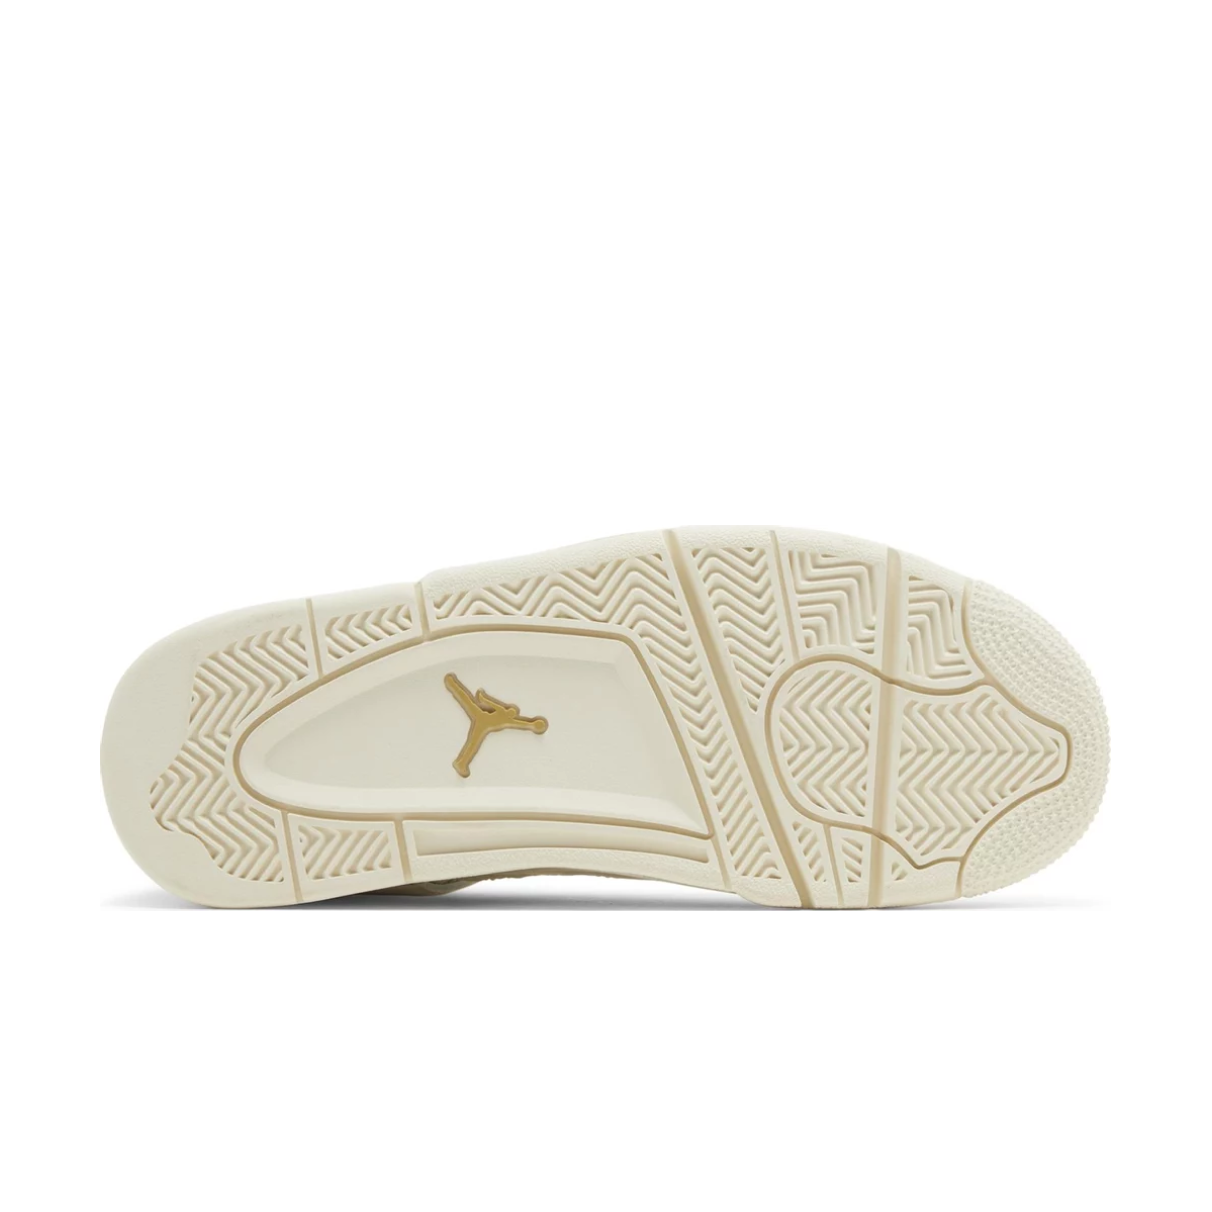 Air Jordan 4 Metallic Gold